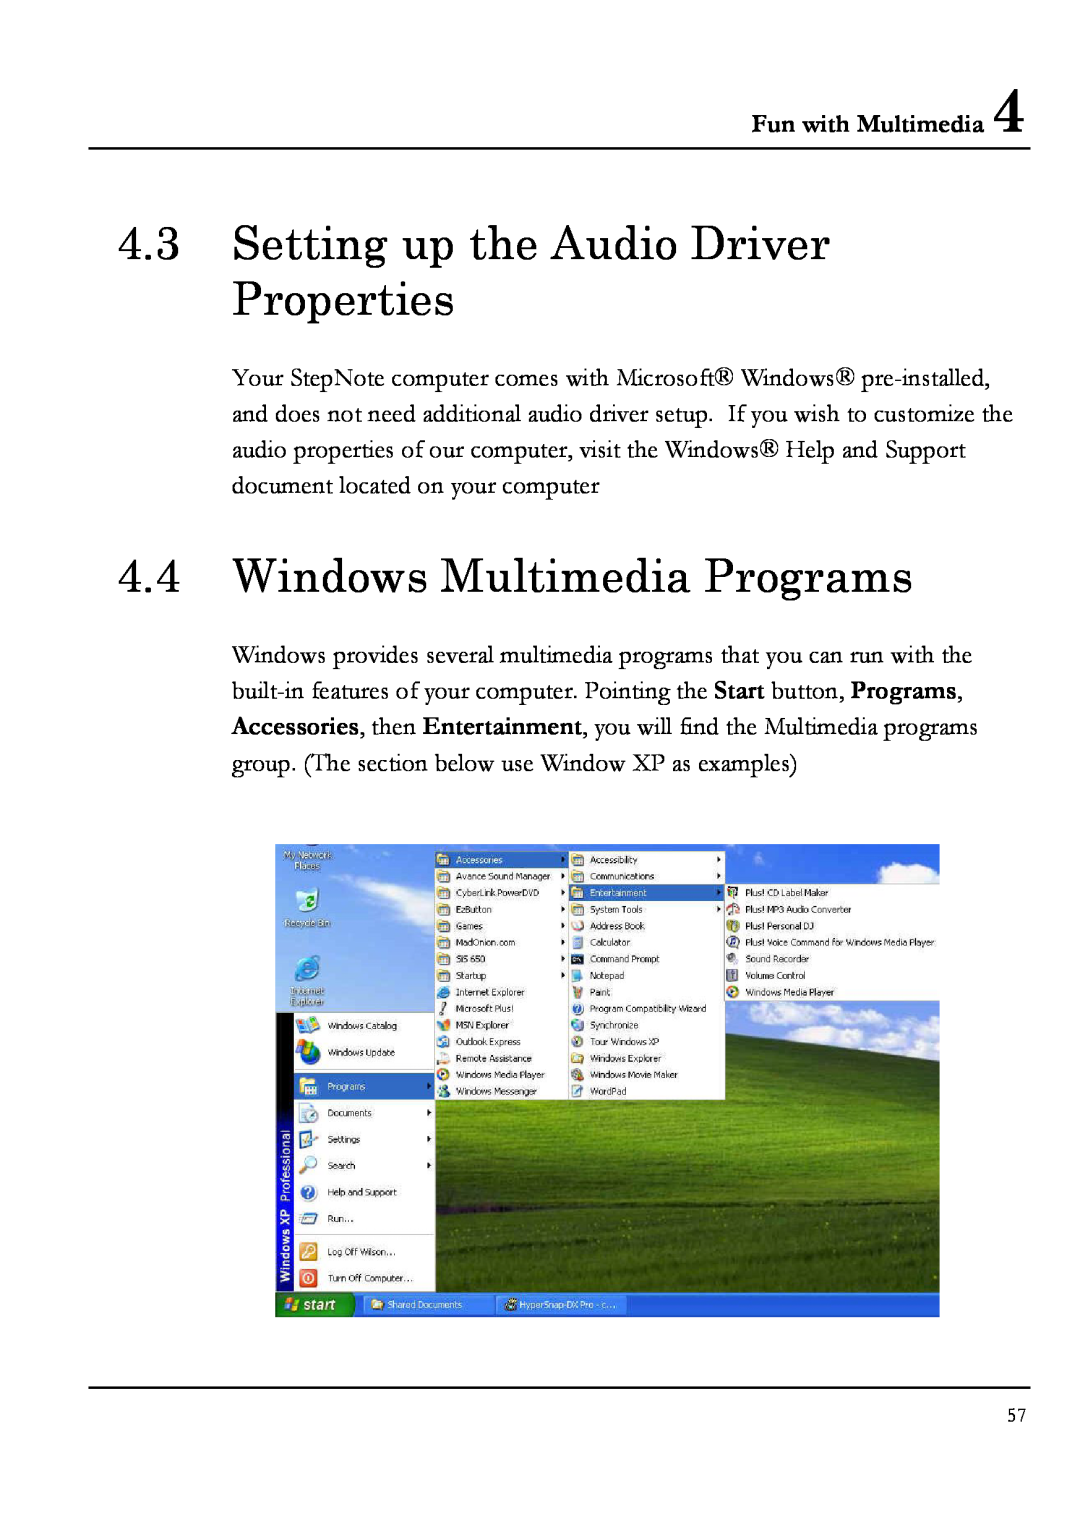 Everex NM3700W, NM4100W, NM3500W Setting up the Audio Driver Properties, Windows Multimedia Programs, Fun with Multimedia 